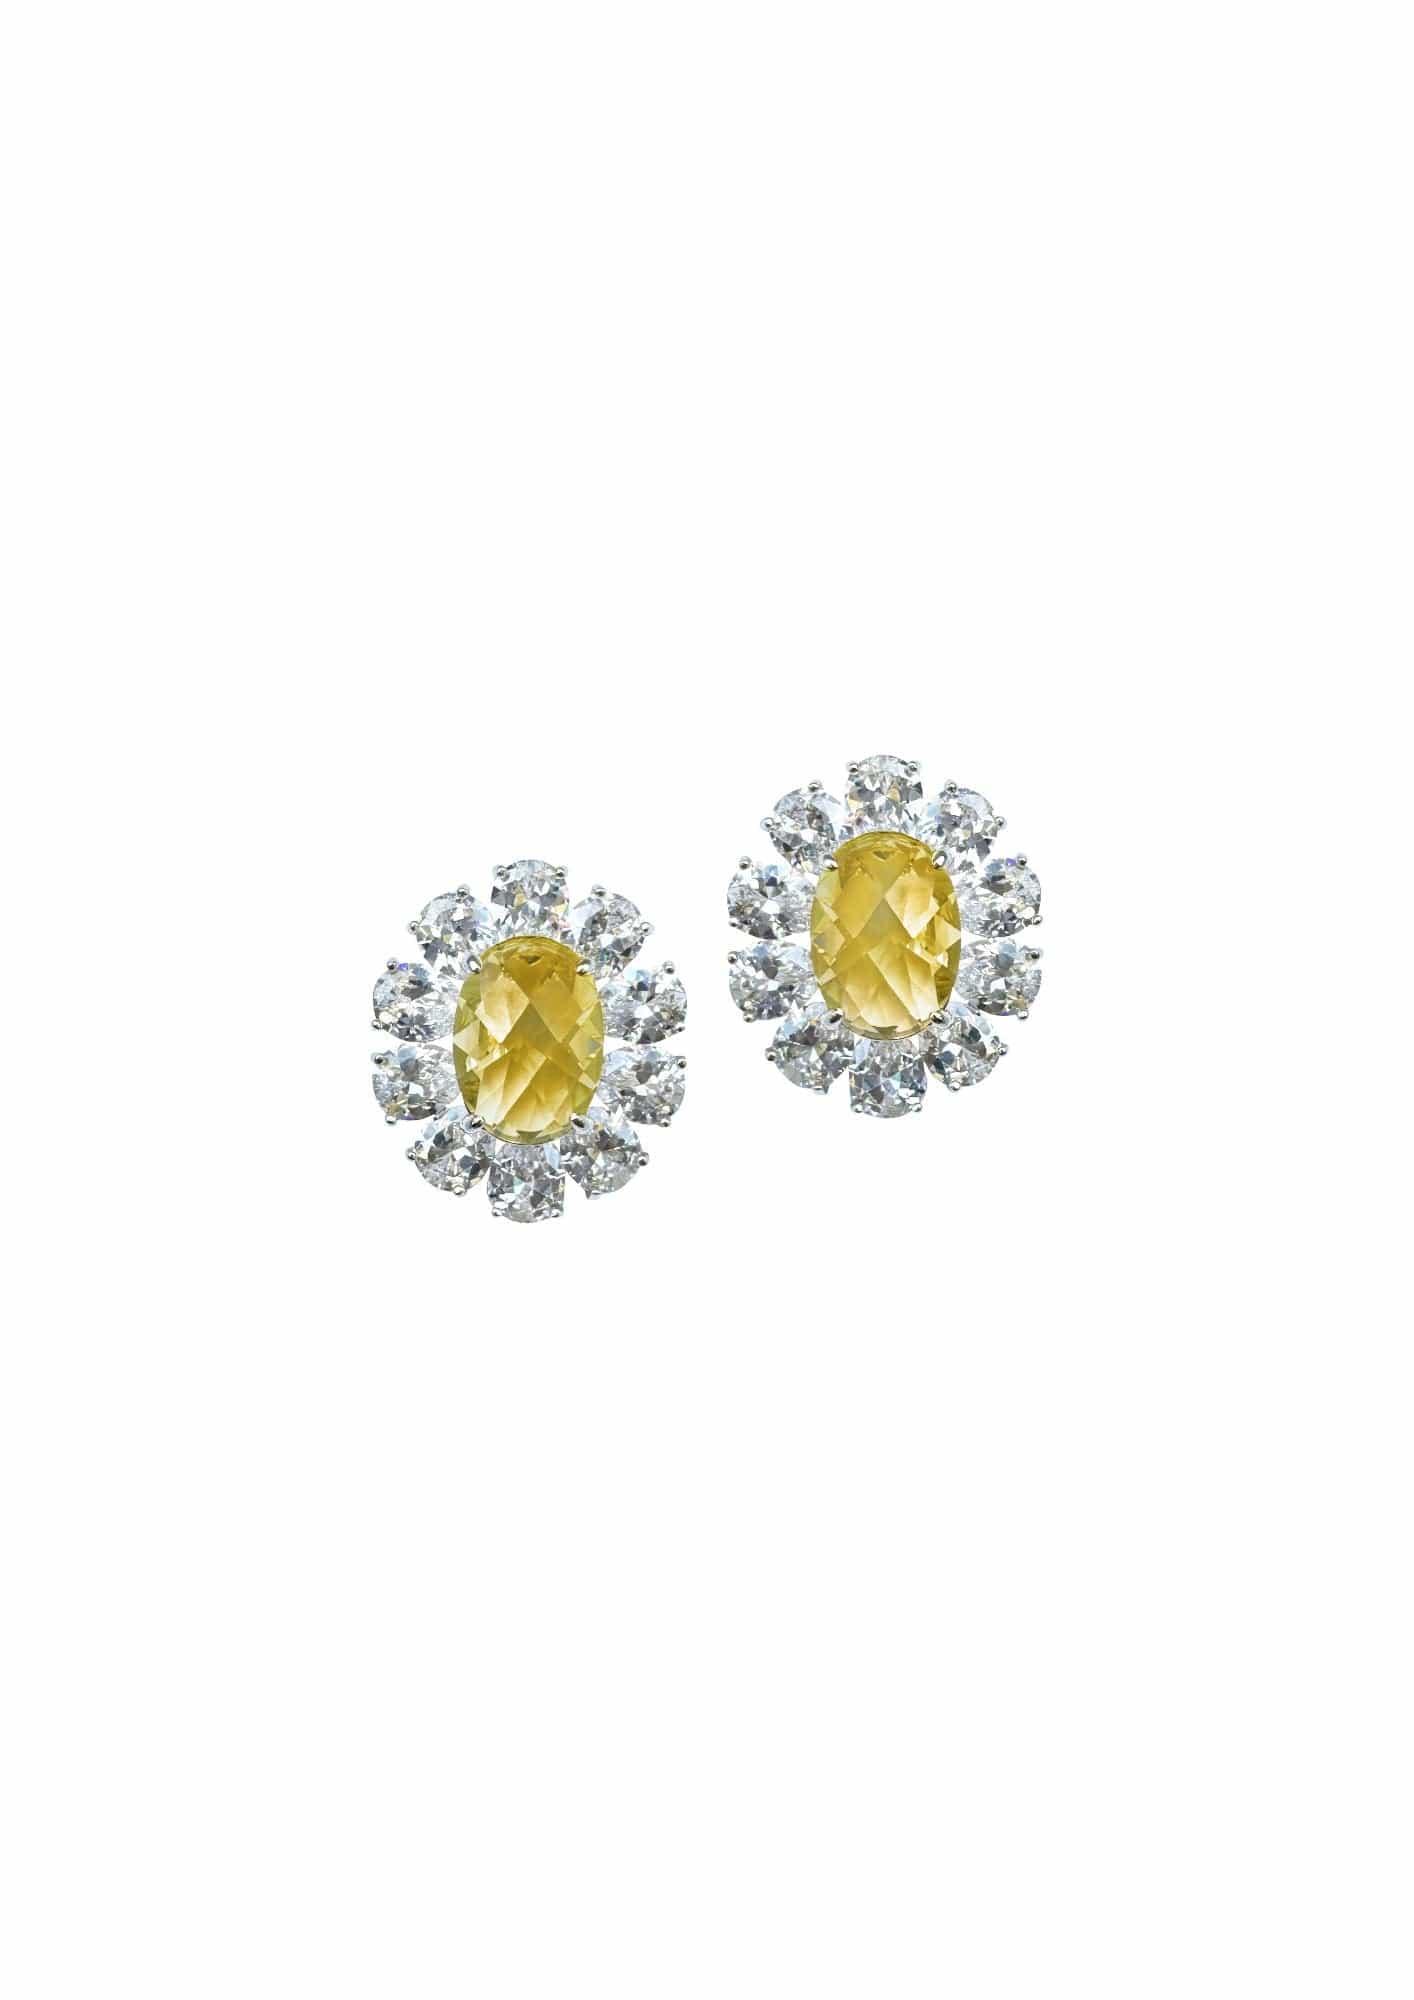 Nicola Bathie Jewelry Earrings Oversize Canary Embellished Studs